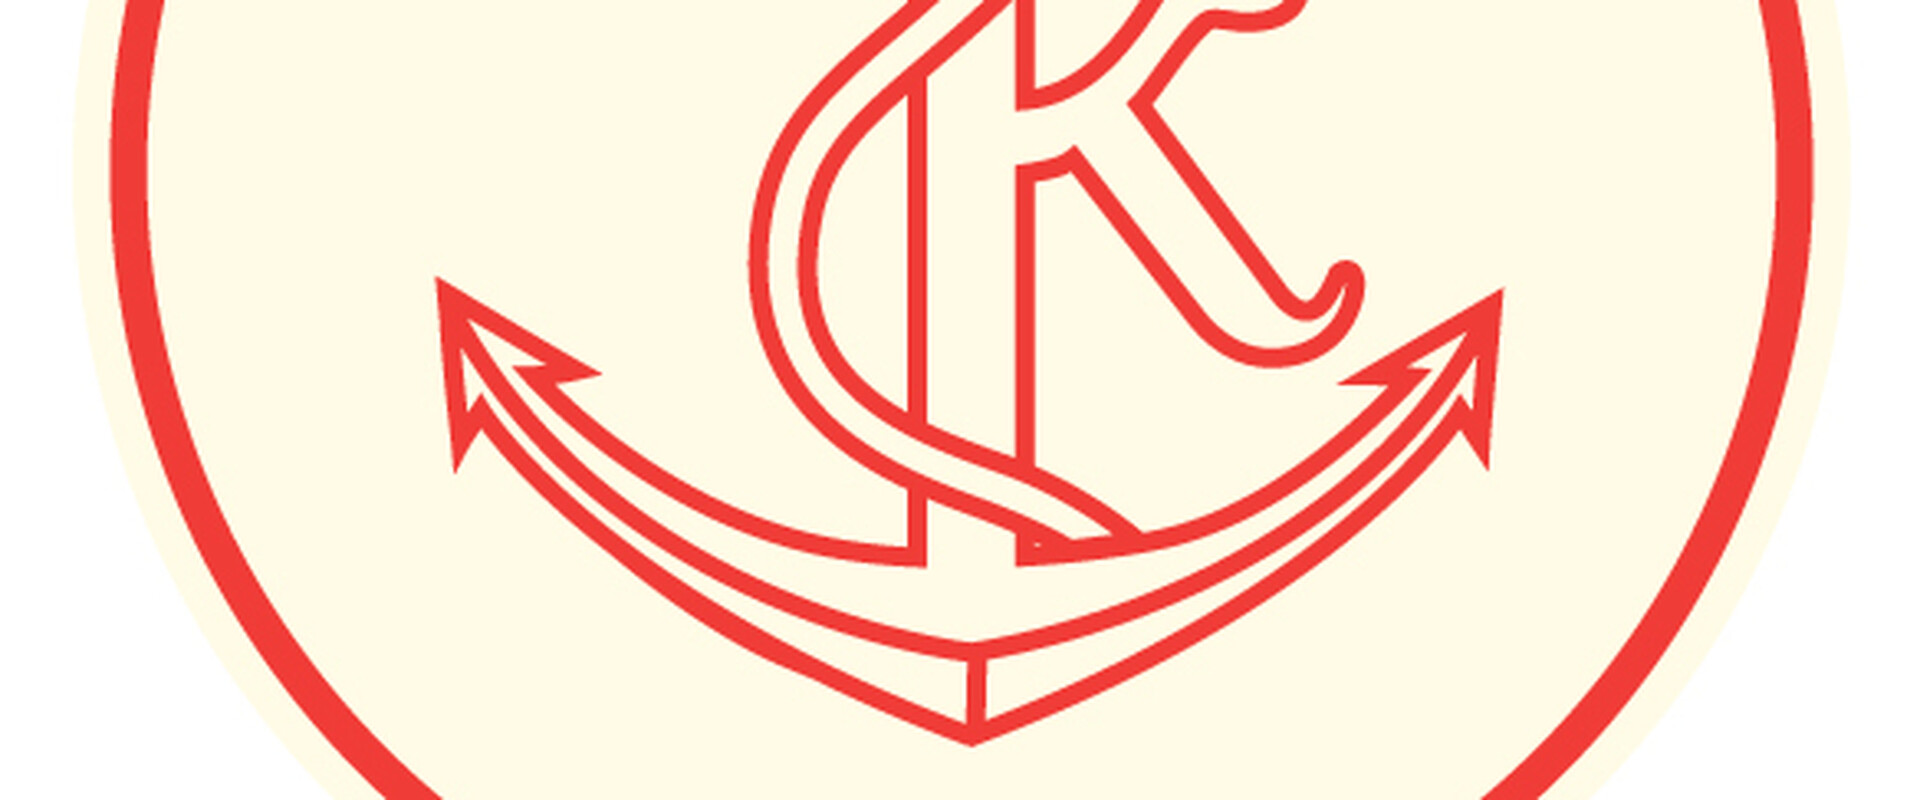 Kristiinankaupunki logo pun nega rgb2